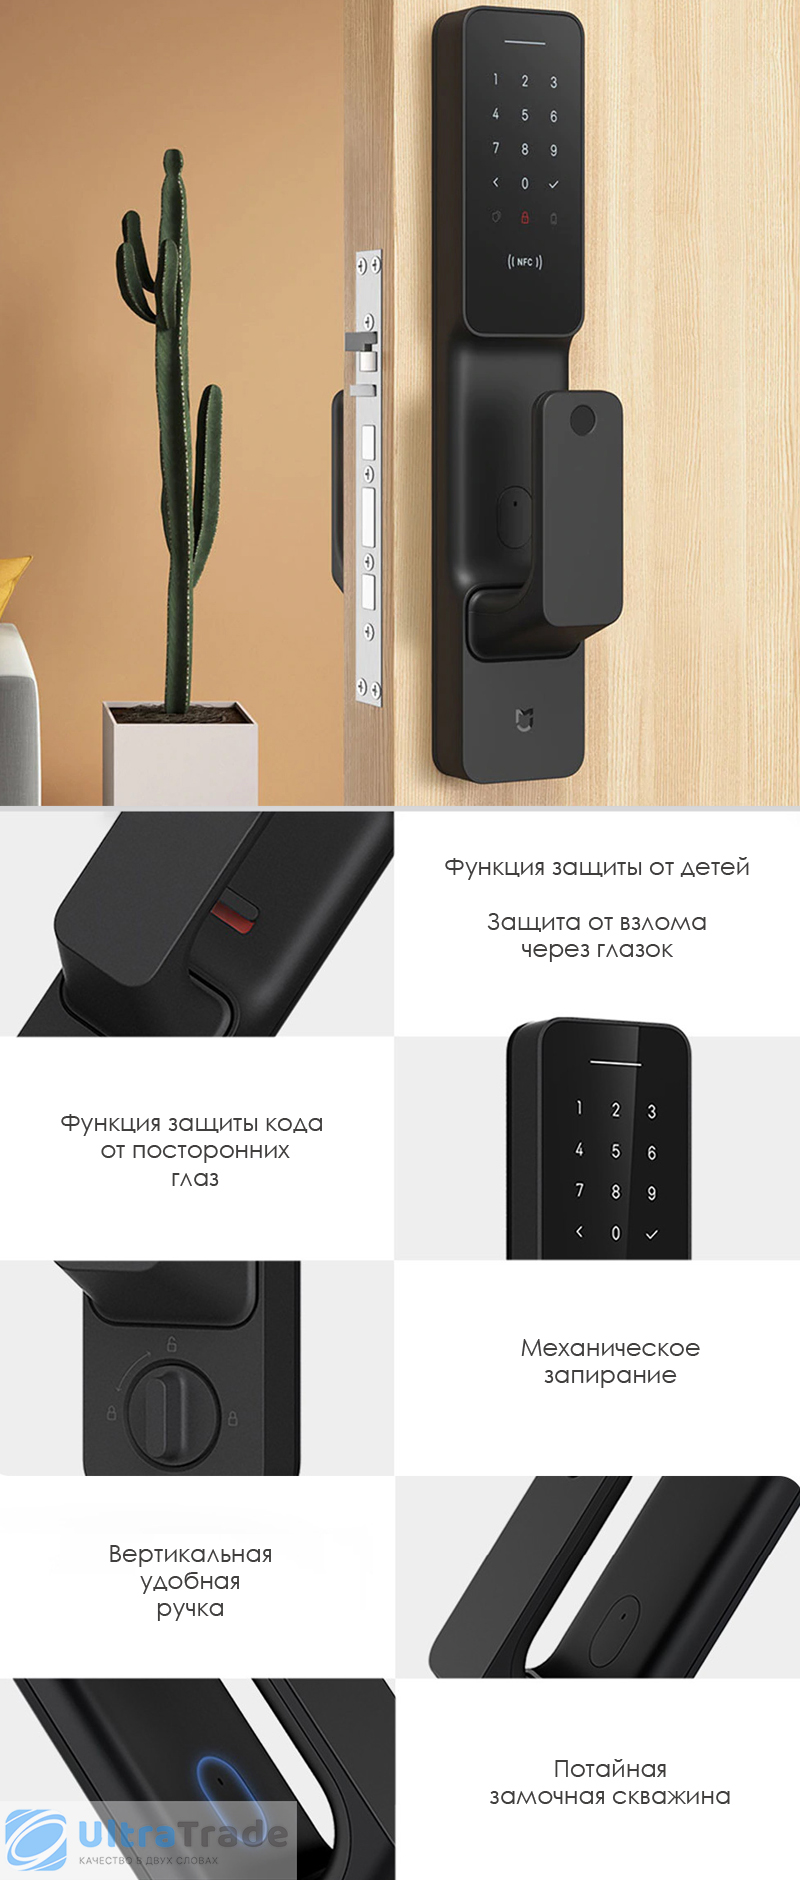 Умный дверной замок Xiaomi Mi Home Smart Lock Push Pull Black (MJZNMST01YD)